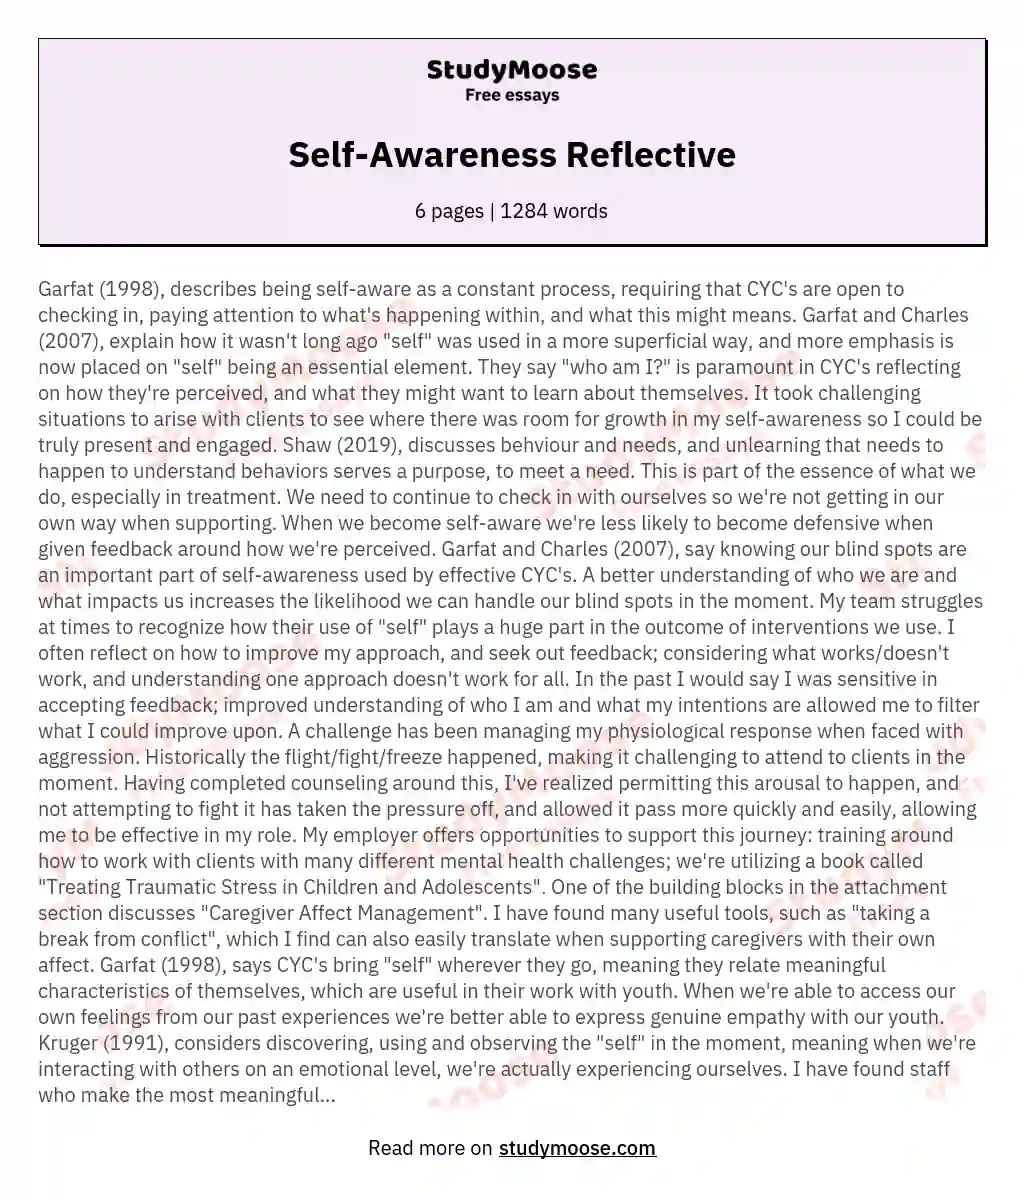 Self-Awareness Reflective essay